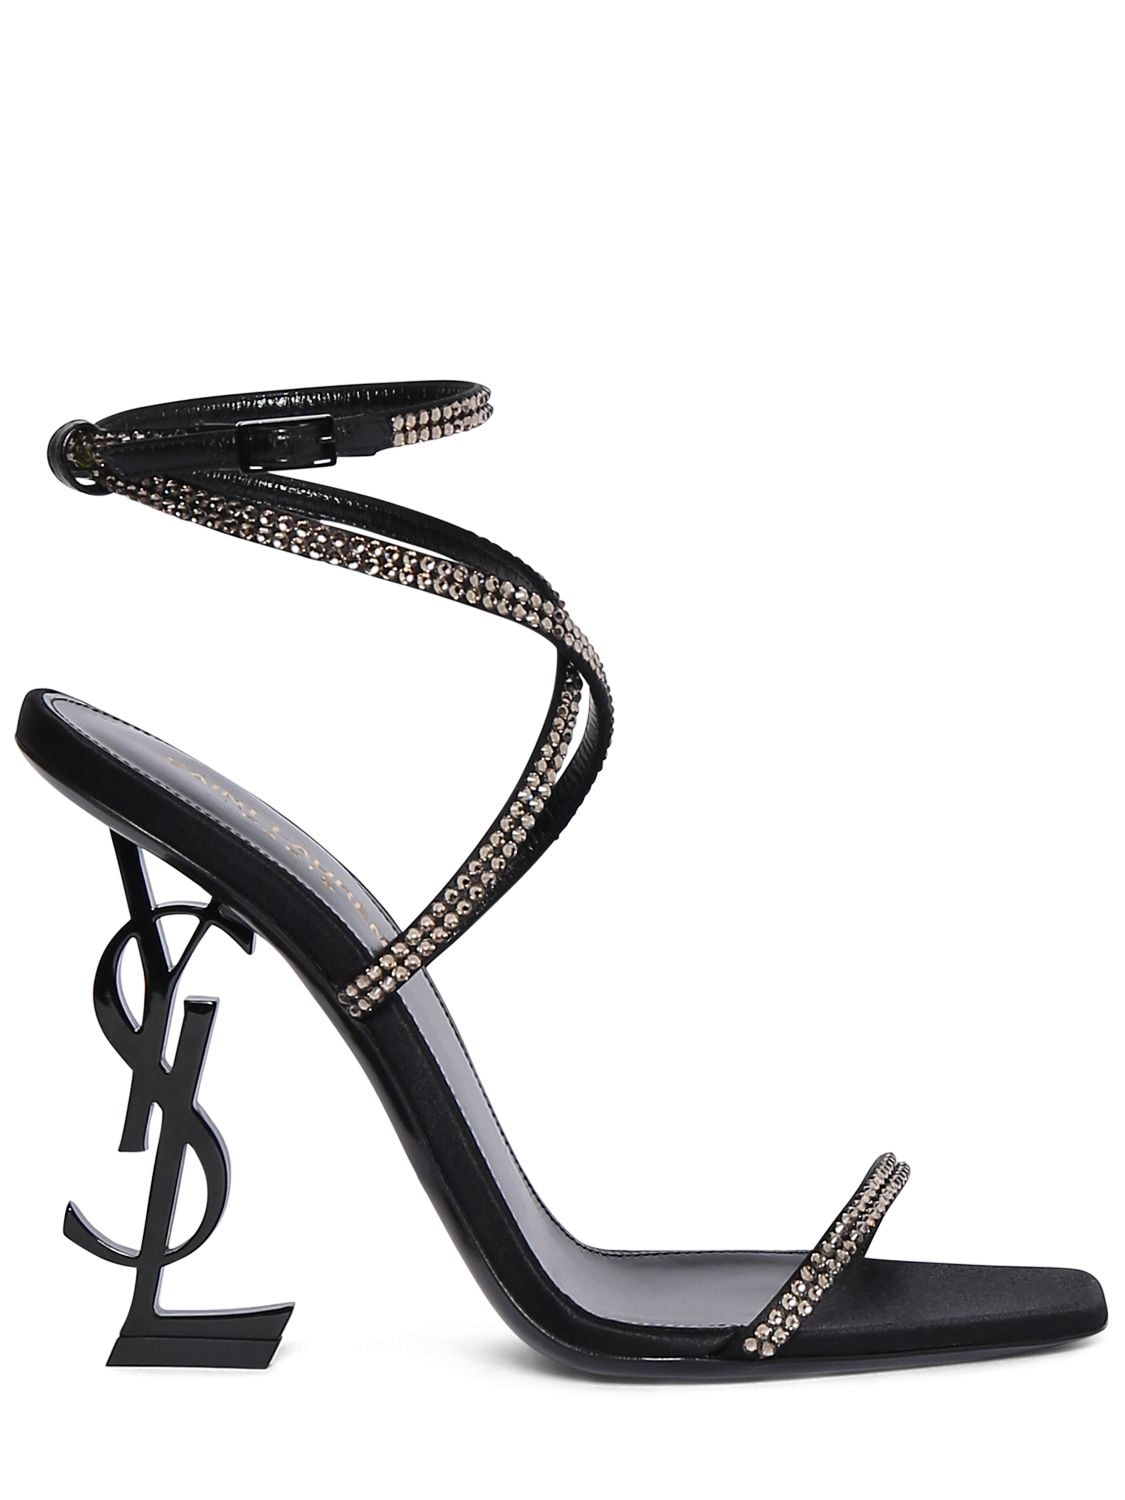 Saint Laurent 110mm Opyum Satin Sandals In Black | ModeSens